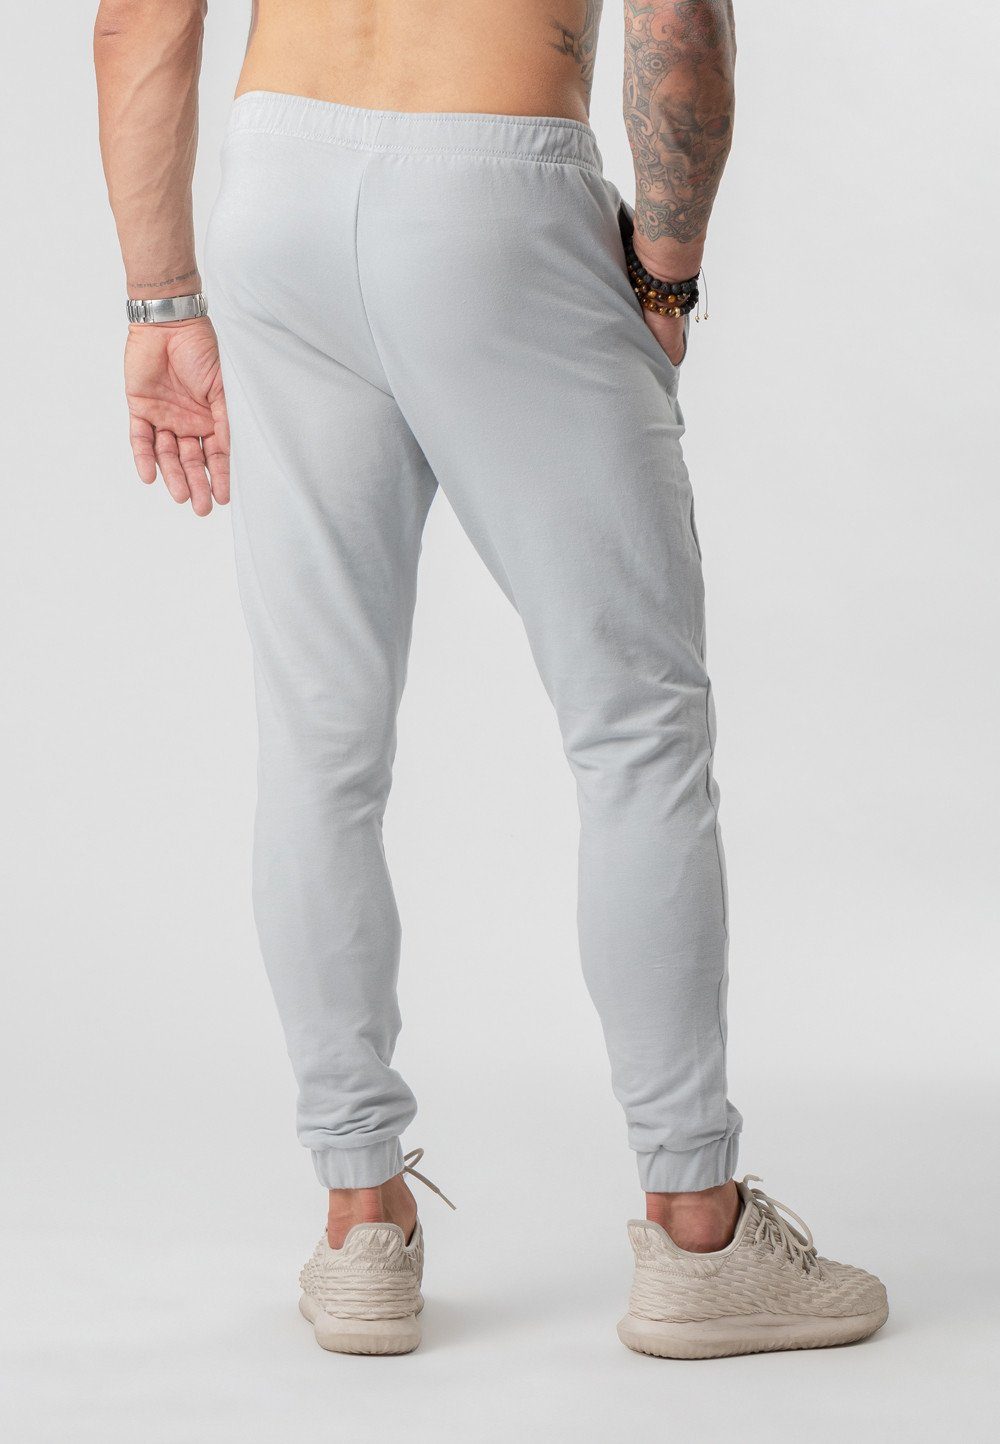 TRES Jogginghose AMIGOS Sweatpants, mit Grau Homewear Bündchen, Sweatpants